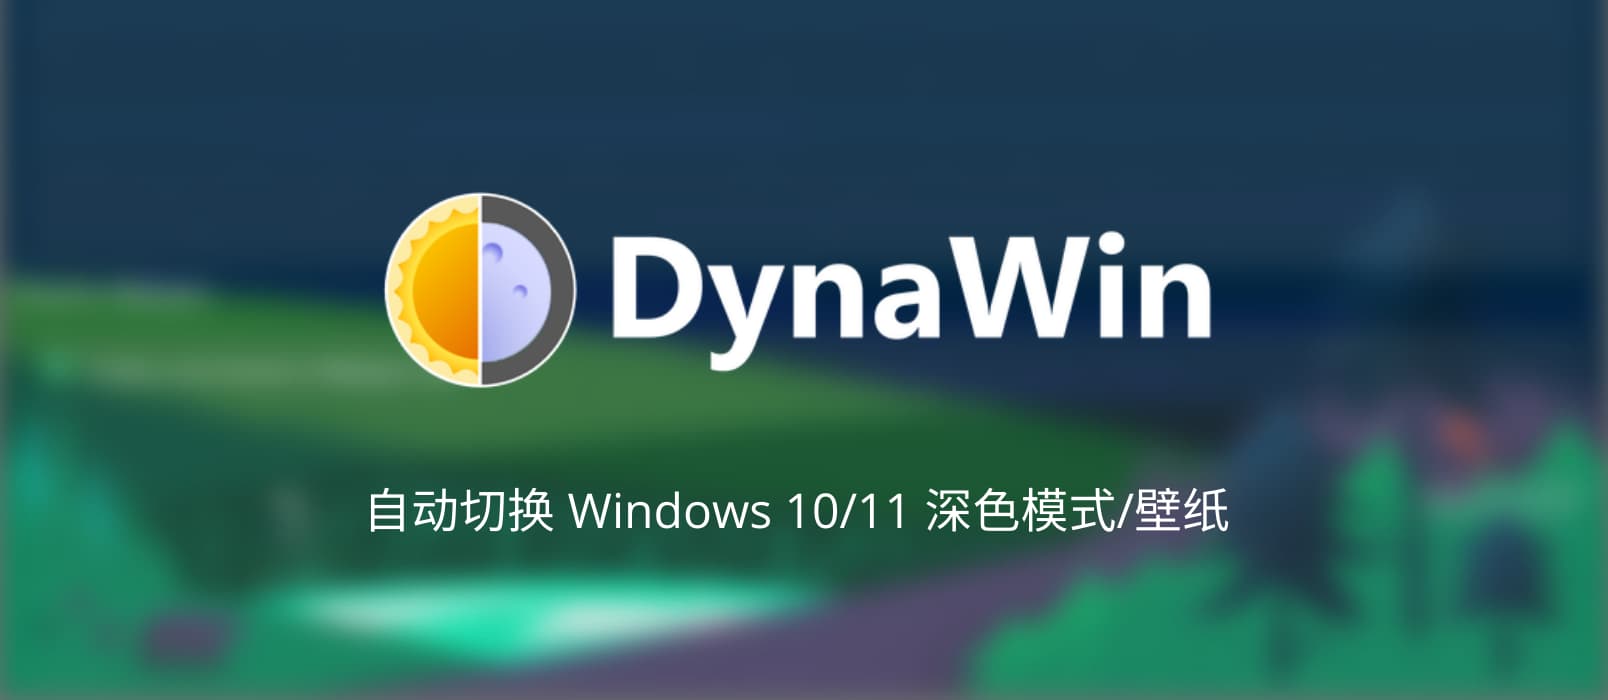 DynaWin - 让 Windows 10/11 根据时间自动切换深色模式，还支持自动更换壁纸